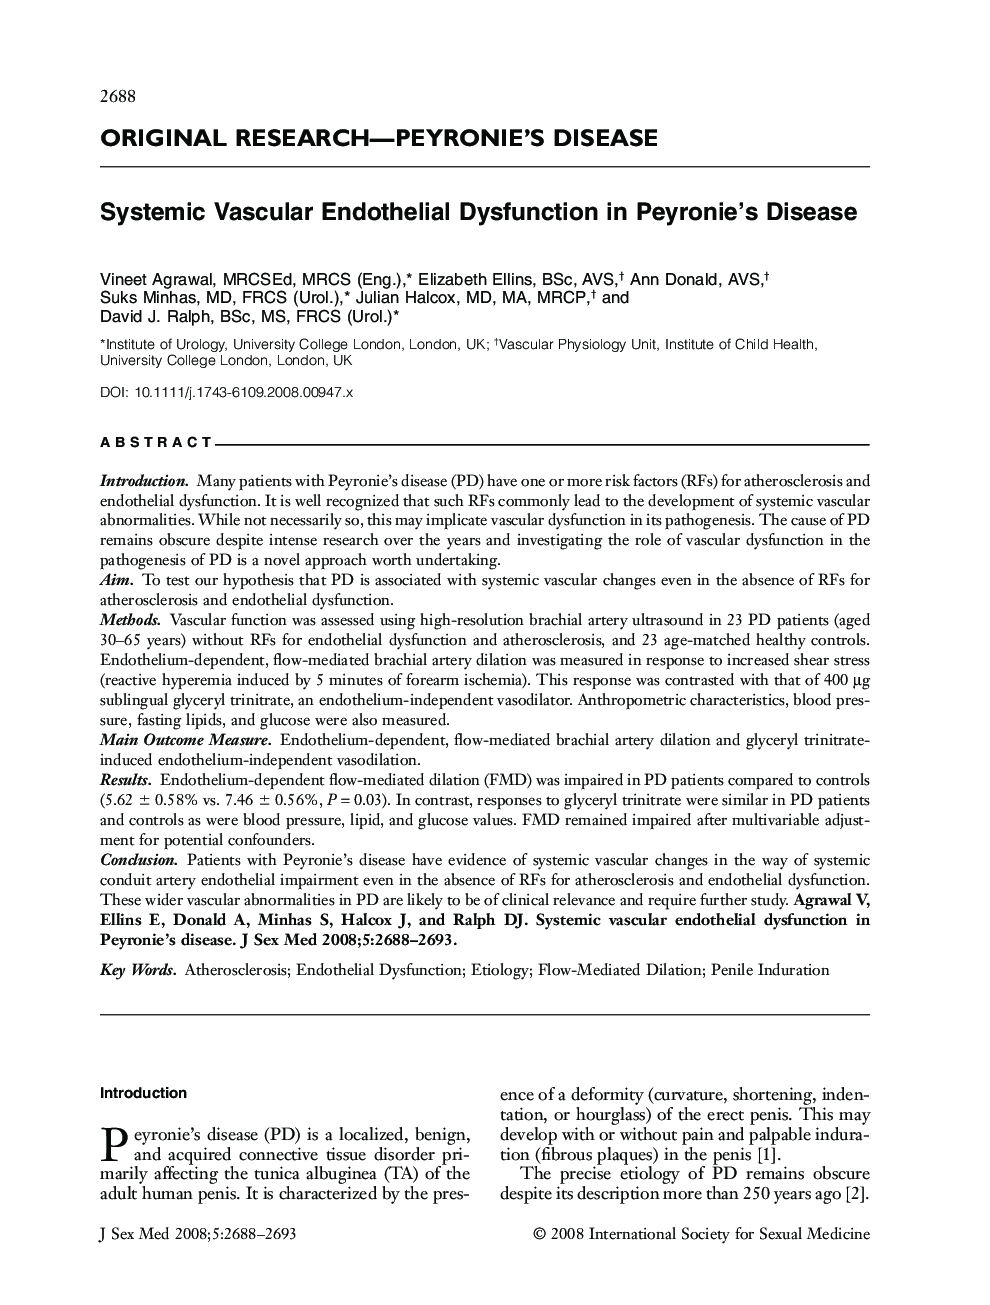 ORIGINAL RESEARCH-PEYRONIE'S DISEASE: Systemic Vascular Endothelial Dysfunction in Peyronie's Disease